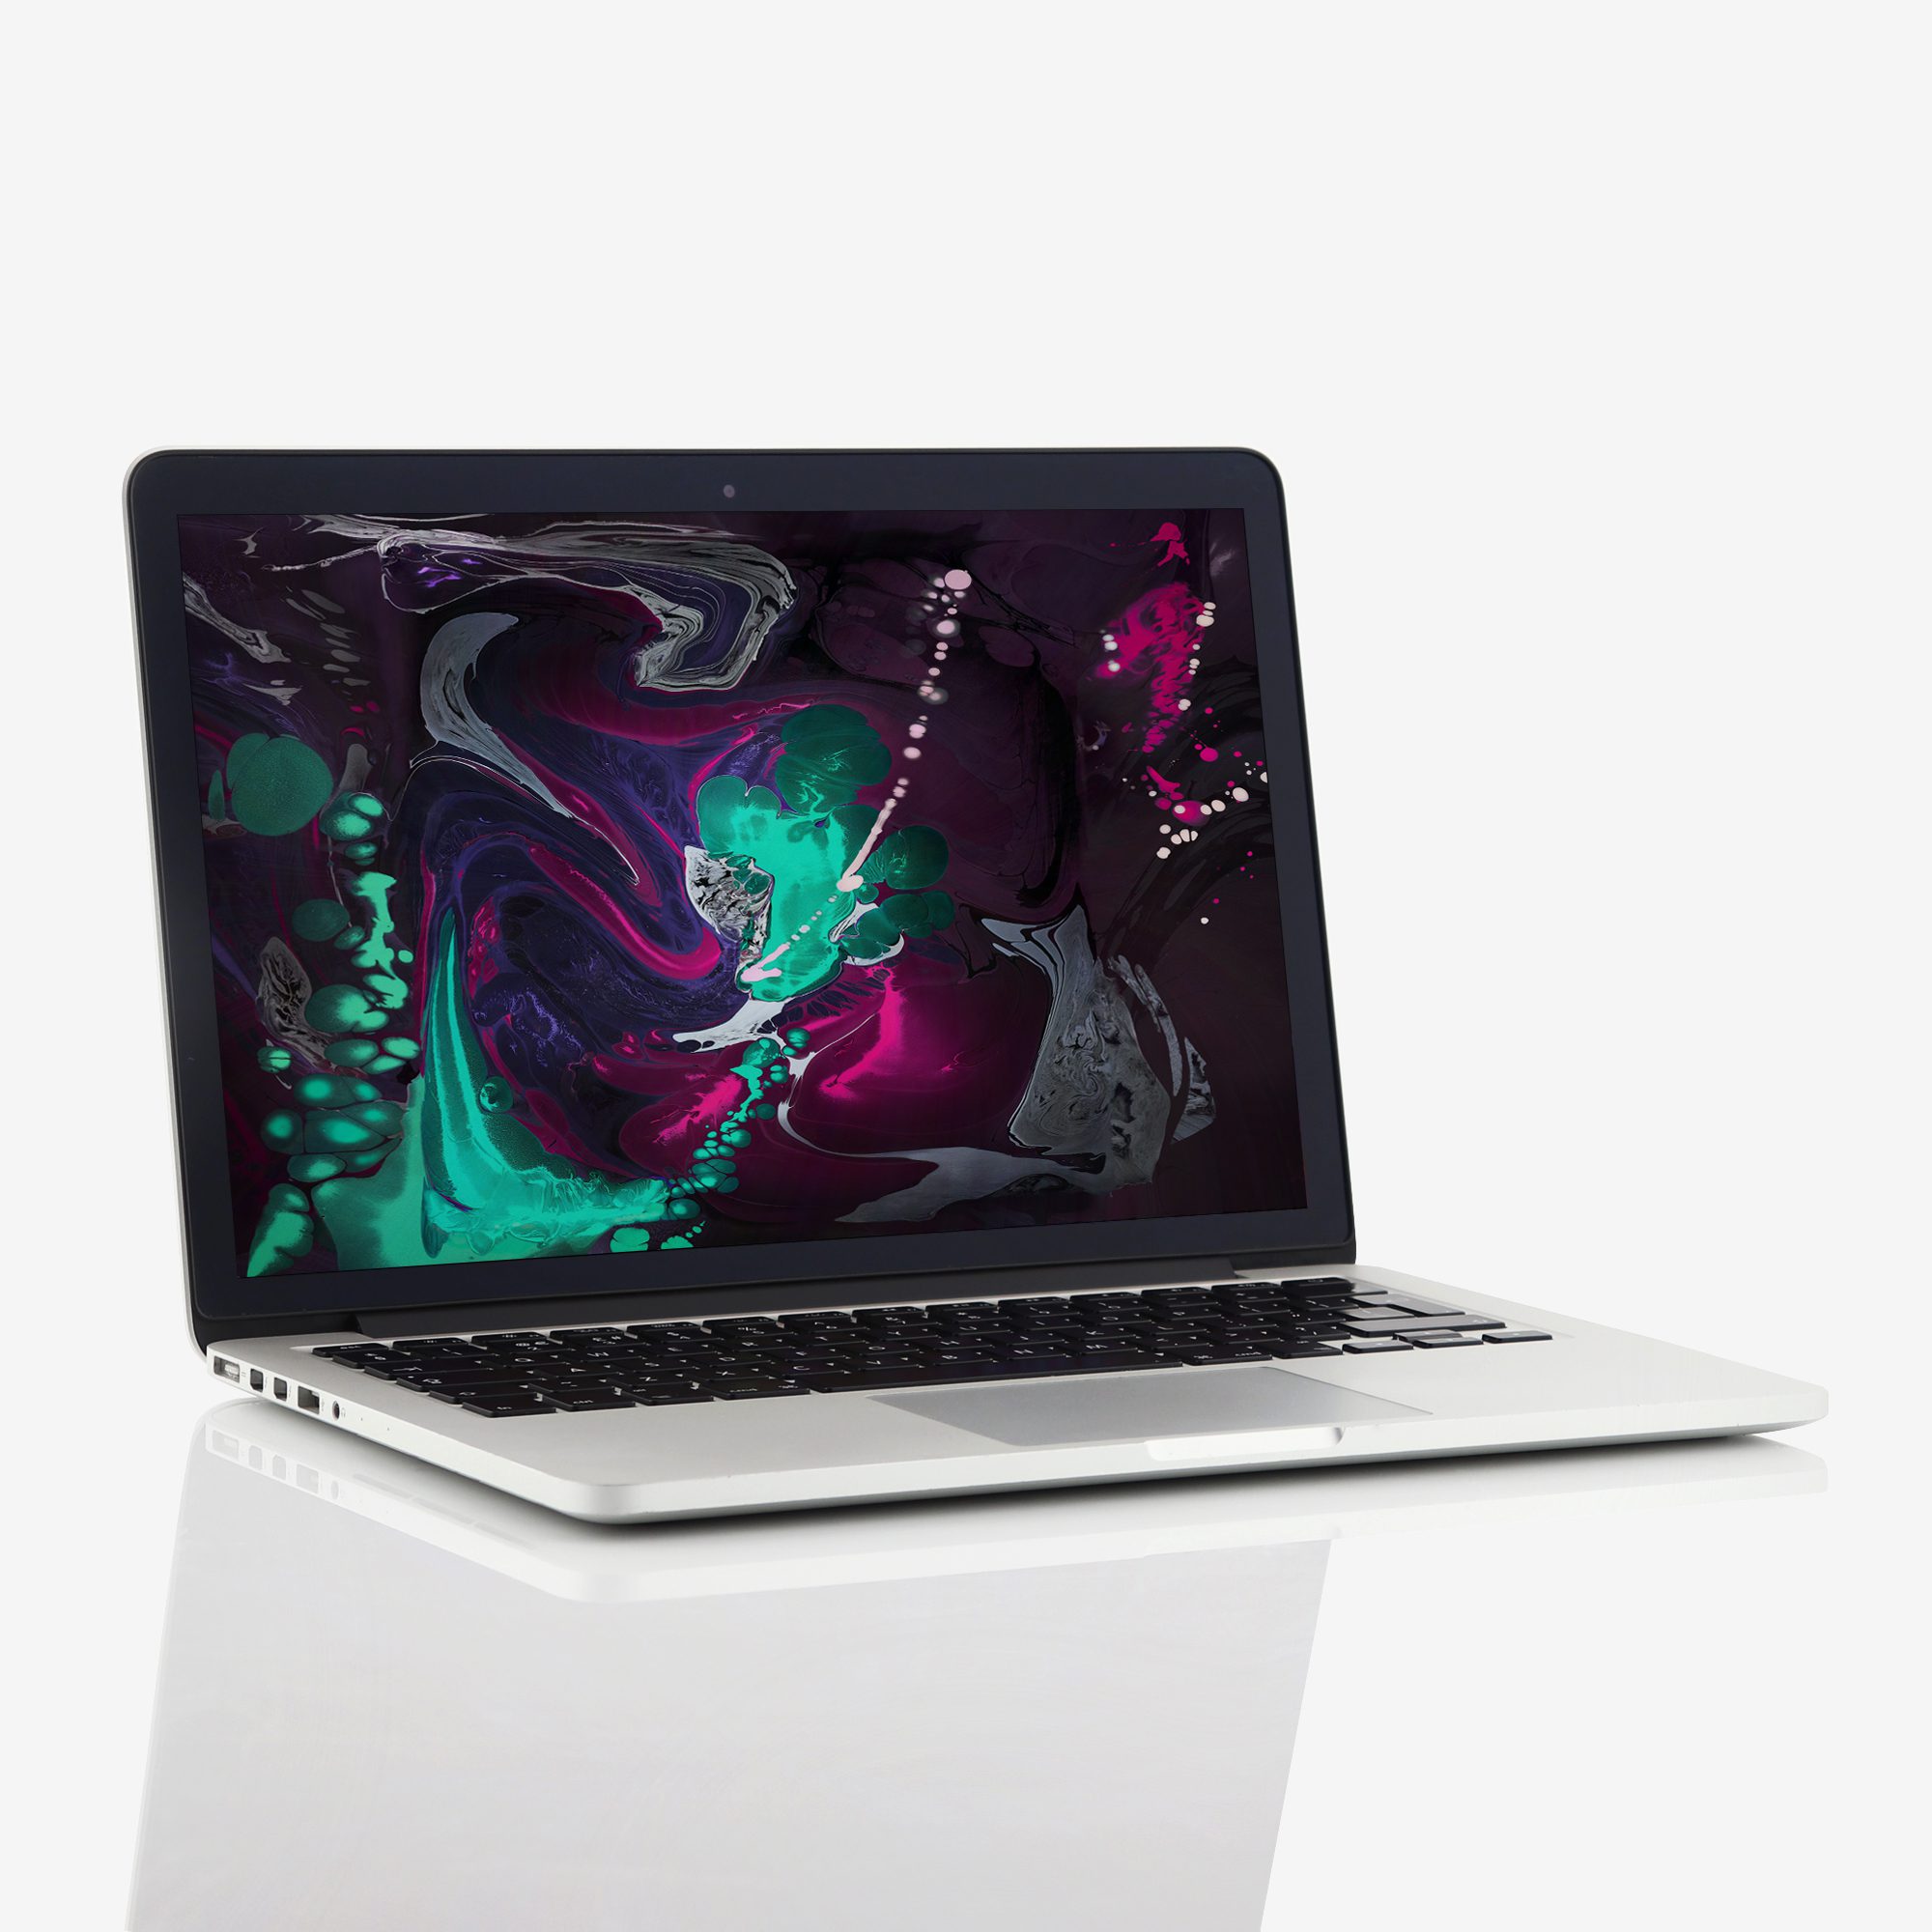 1 x Apple MacBook Pro Retina 13 Inch Intel Core i5 2.60 GHz (2014)